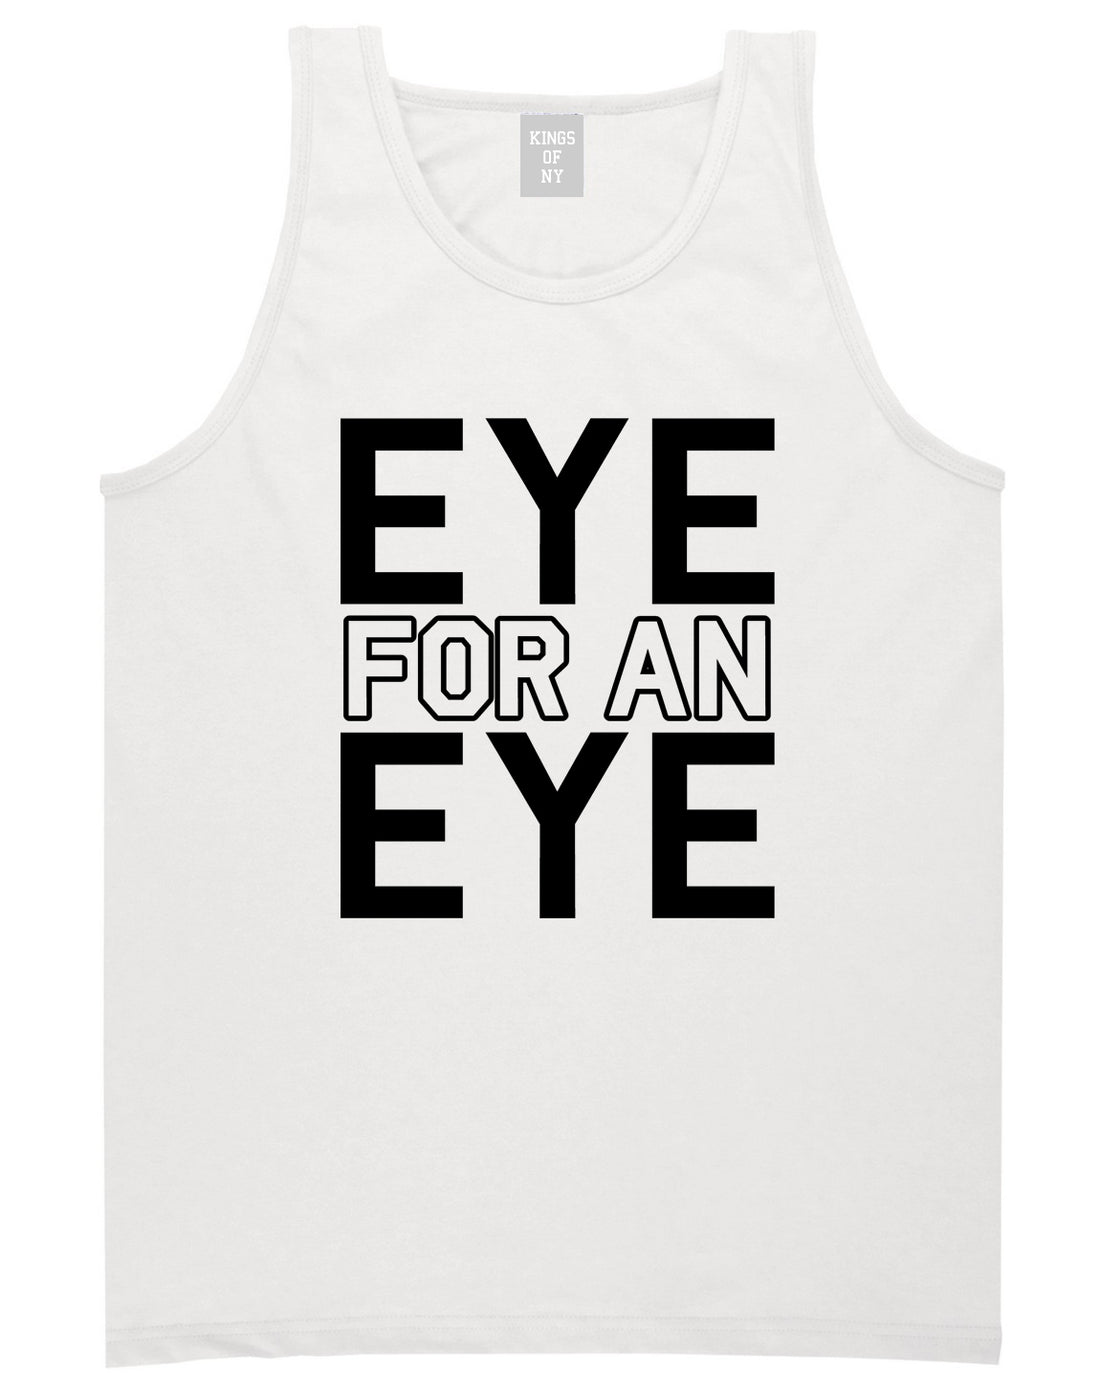 Eye For An Eye Mens Tank Top Shirt White